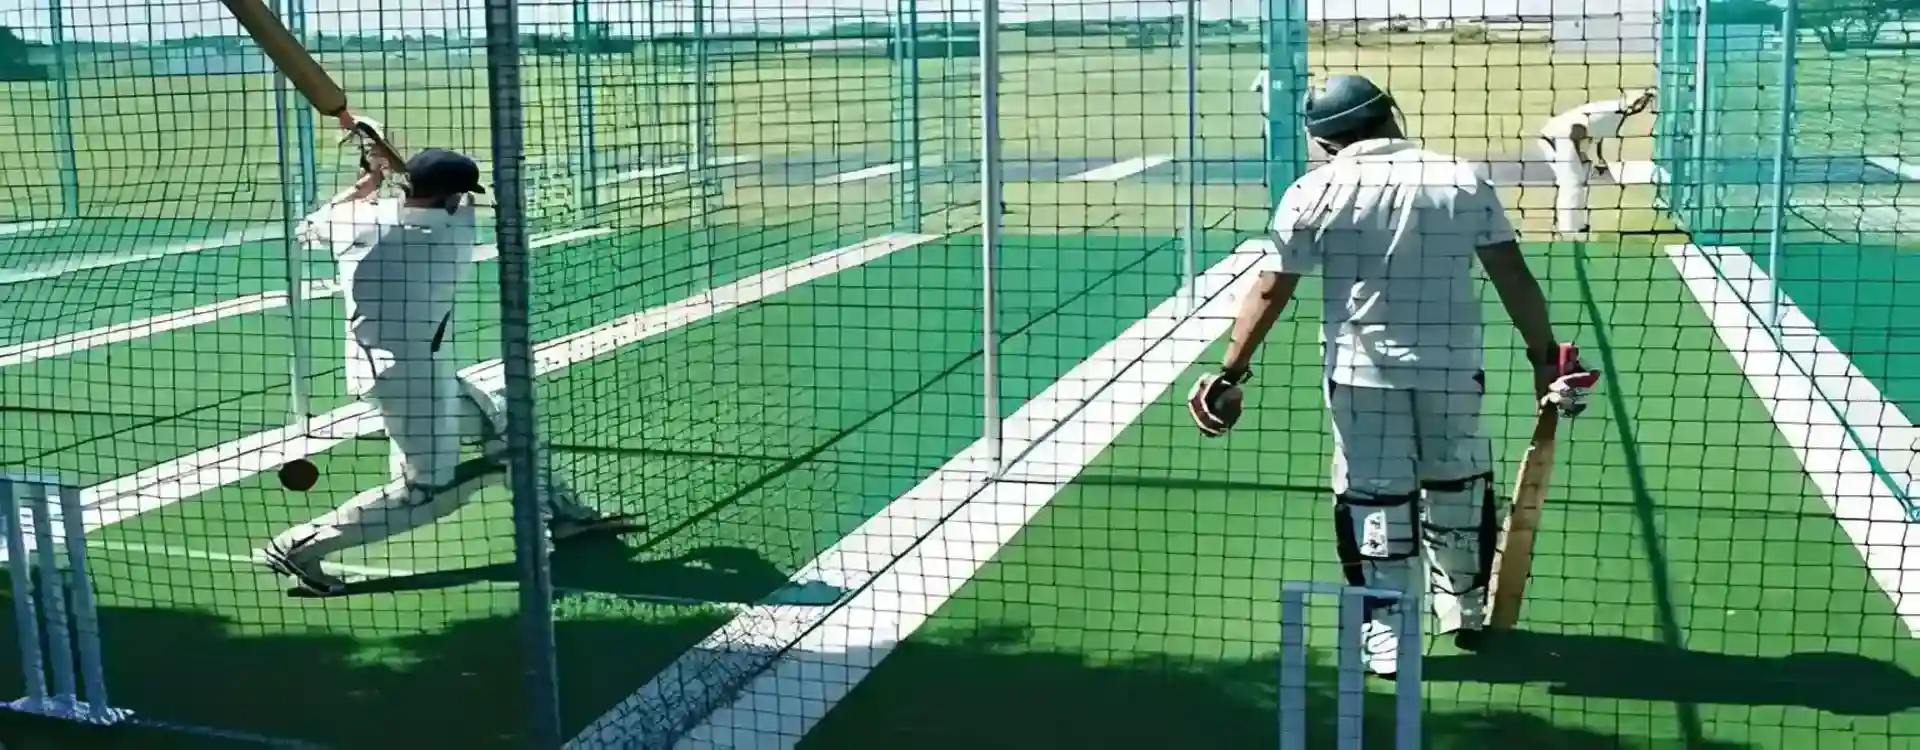 Fortified Nets Cricket Practice Nets in Kakinada, Guntur, Rajahmundry, Vizag, Vizianagaram, Vijayawada, Srikakulam, Ongole, Nellore, Kadapa, Anantapur, Kurnool